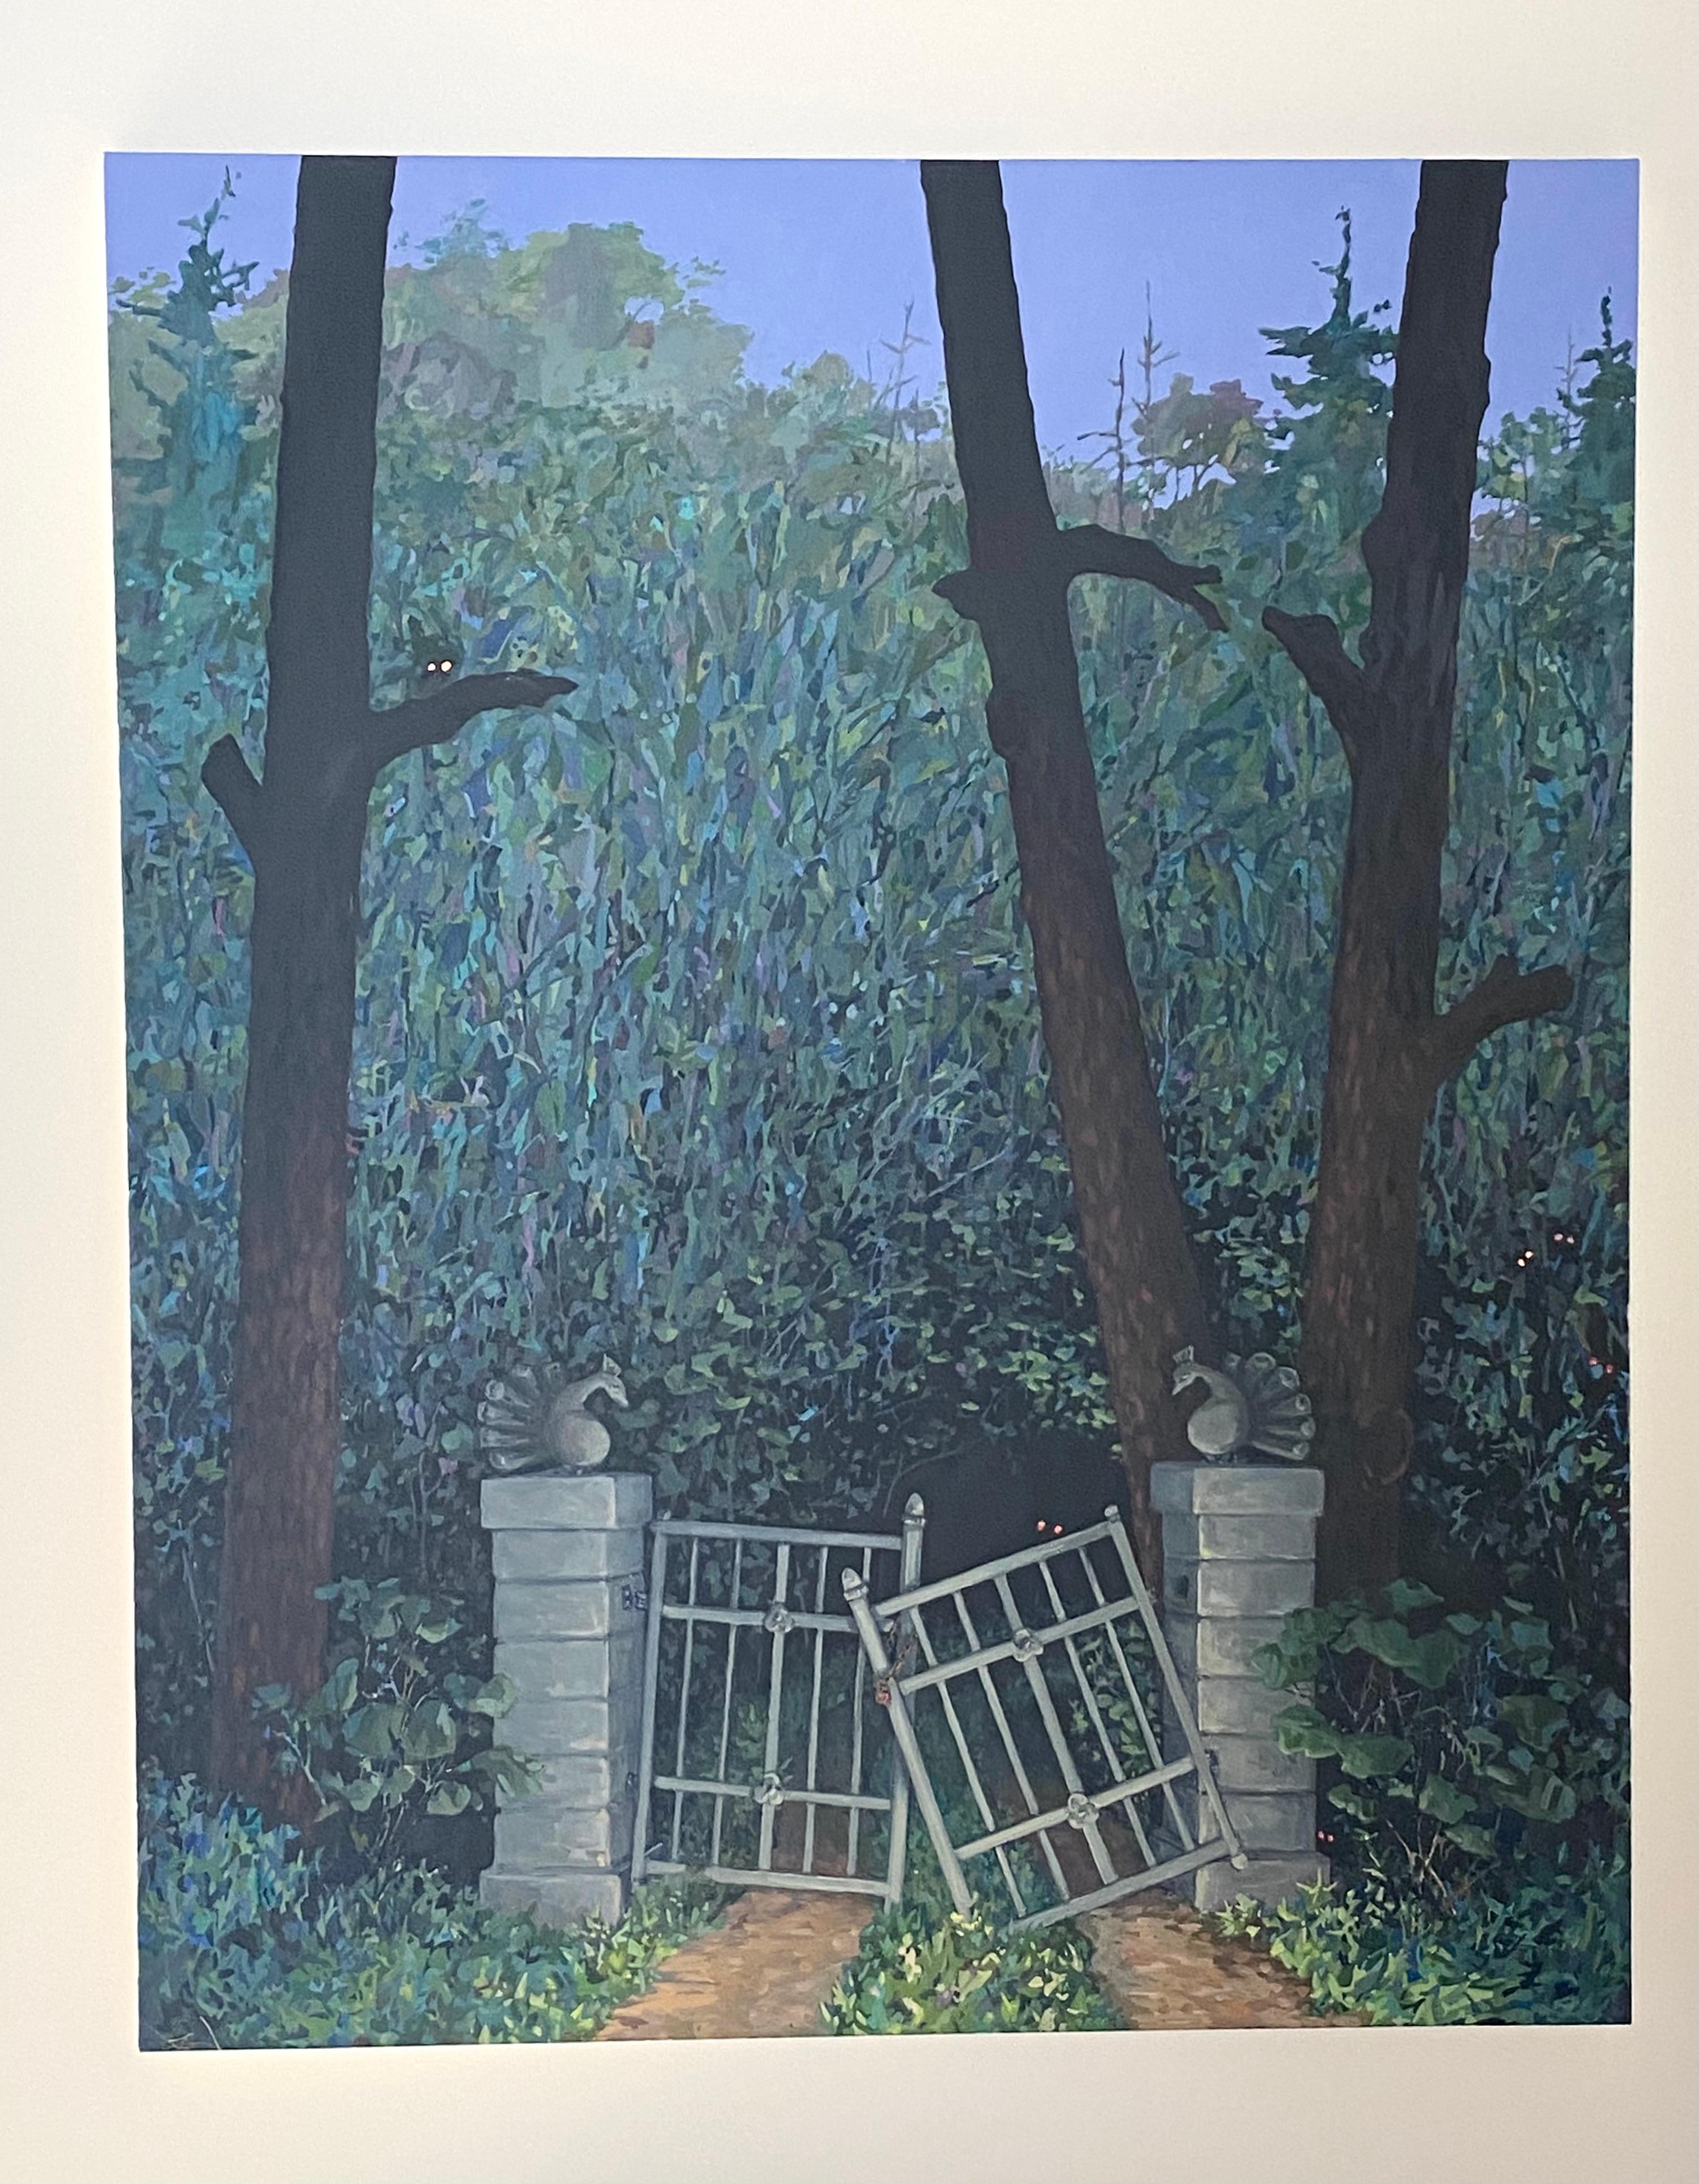 Broken Gate, Green Trees, Stone Gate, Pathway, Blue Night Forest Landscape - Painting by KK Kozik